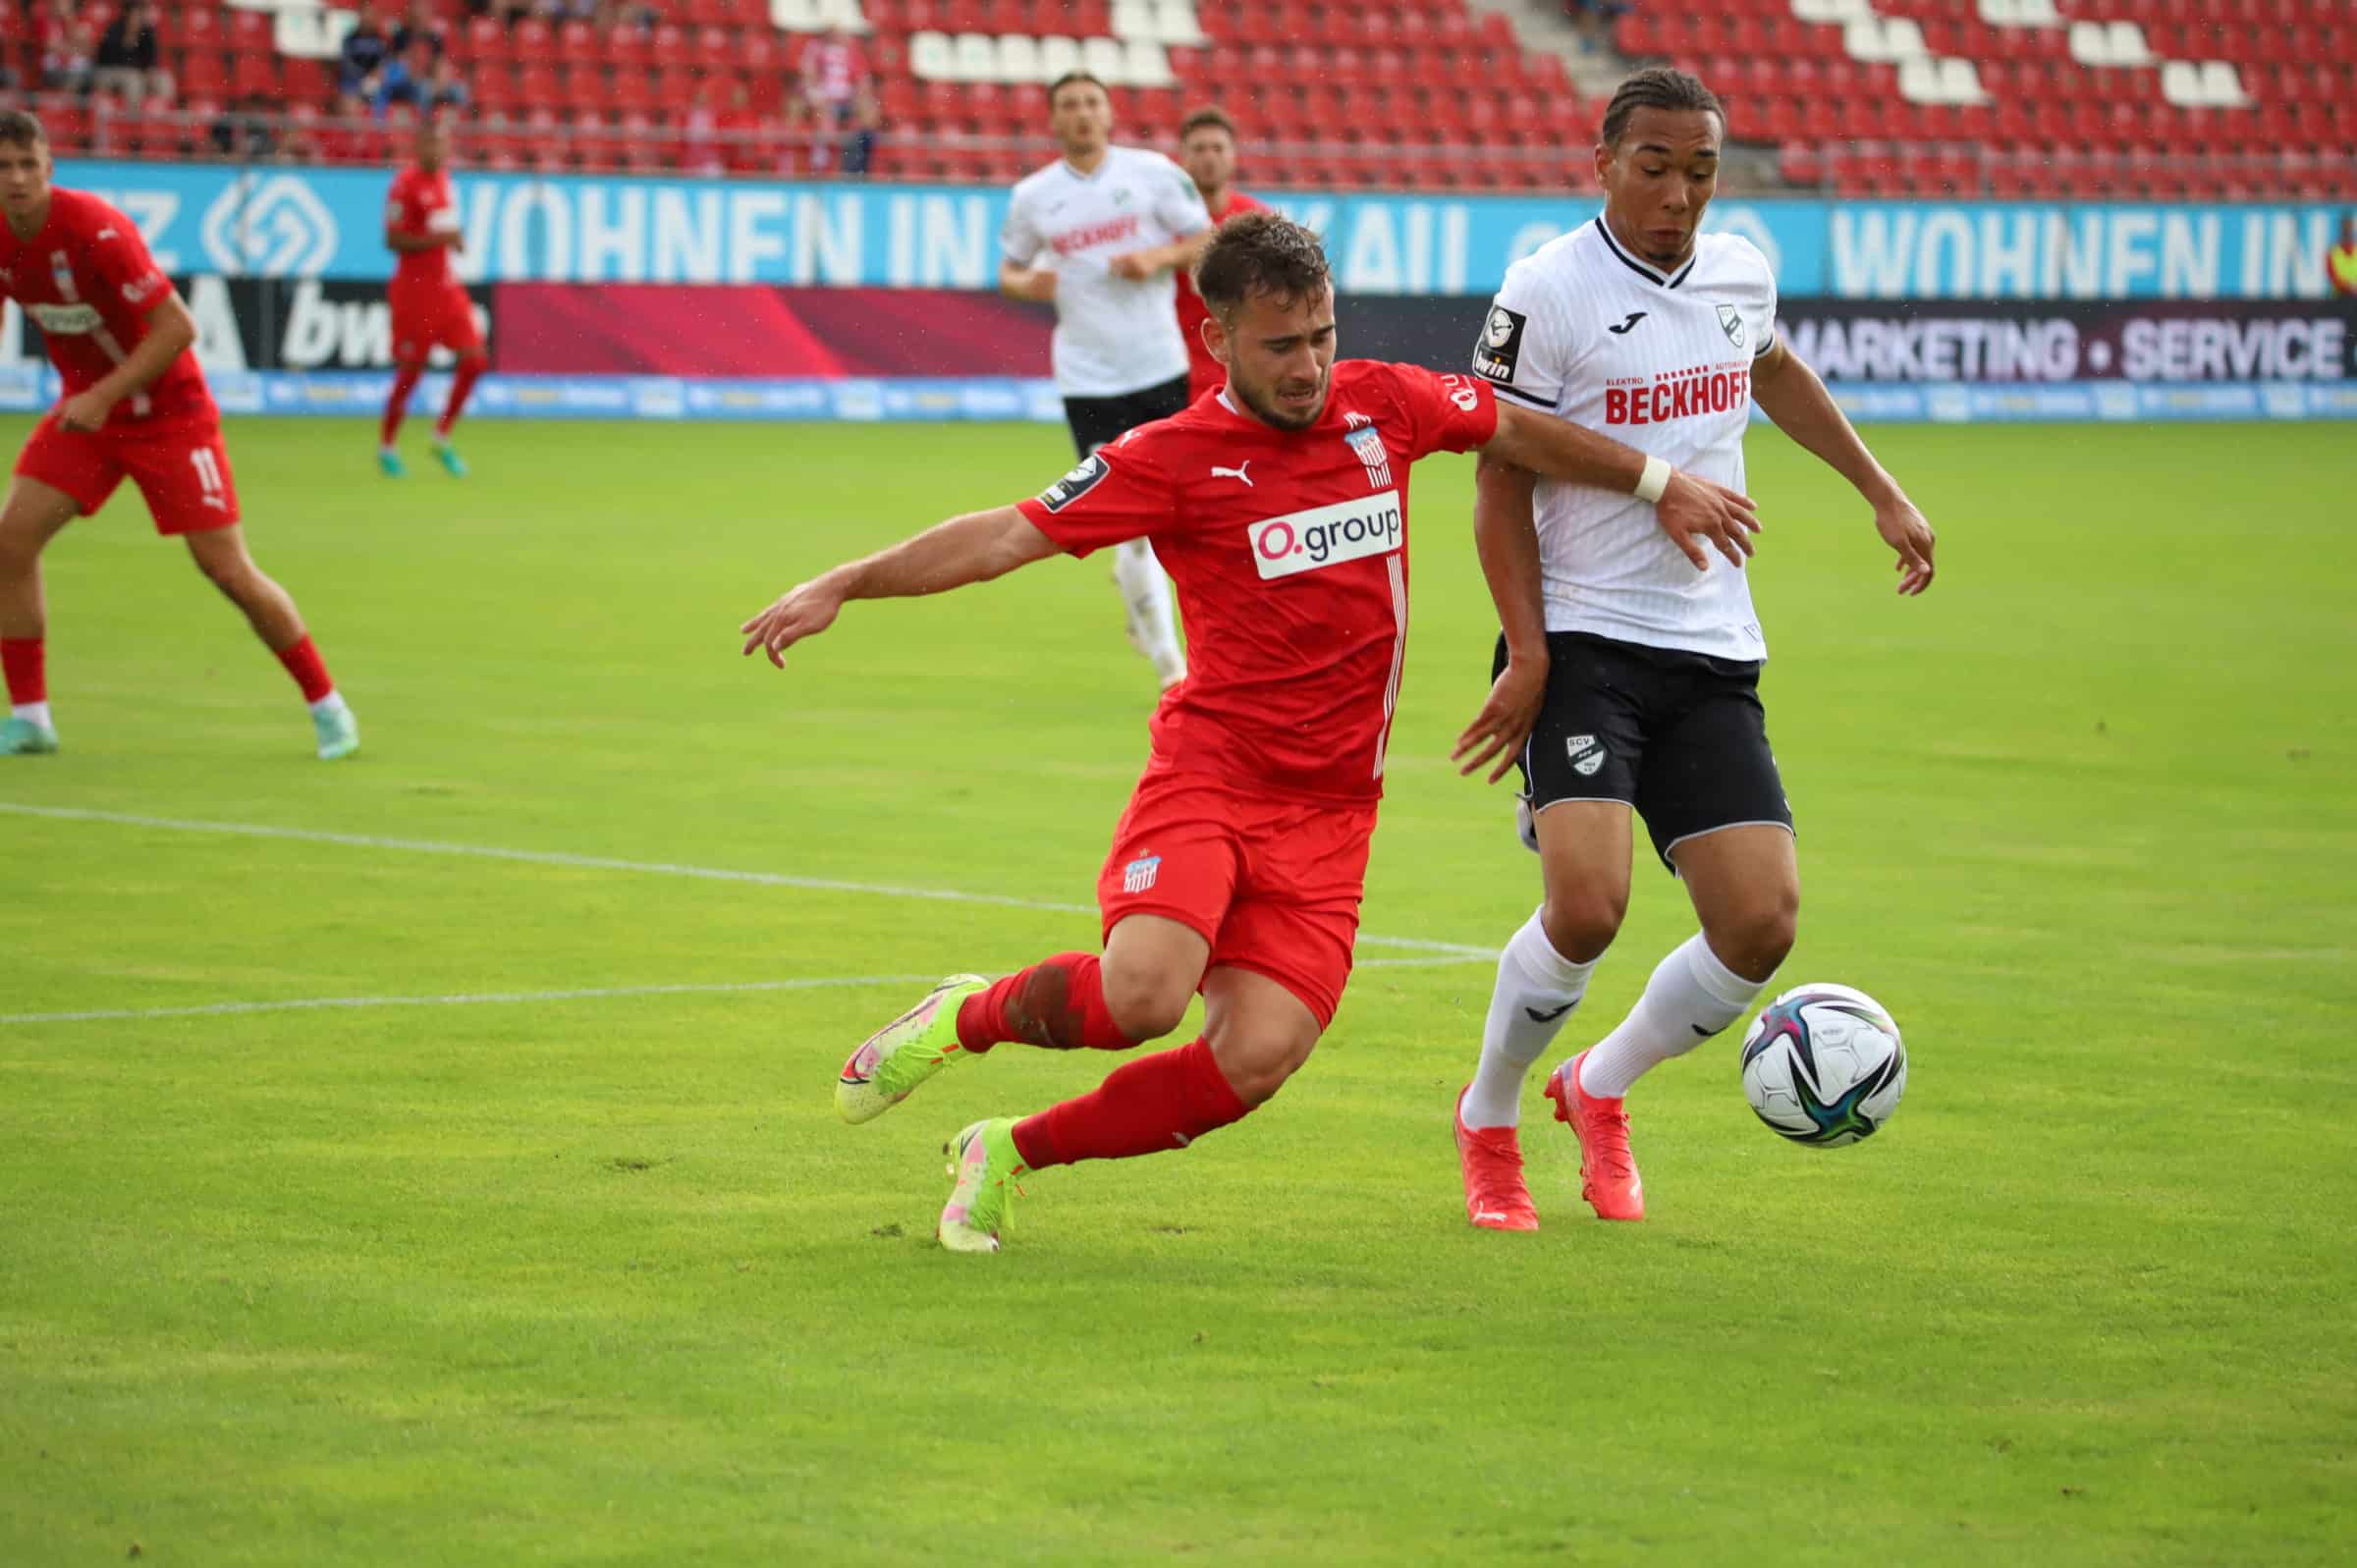 FSV Zwickau – Sportclub Verl 1:3 (1:2) [8. Spieltag]